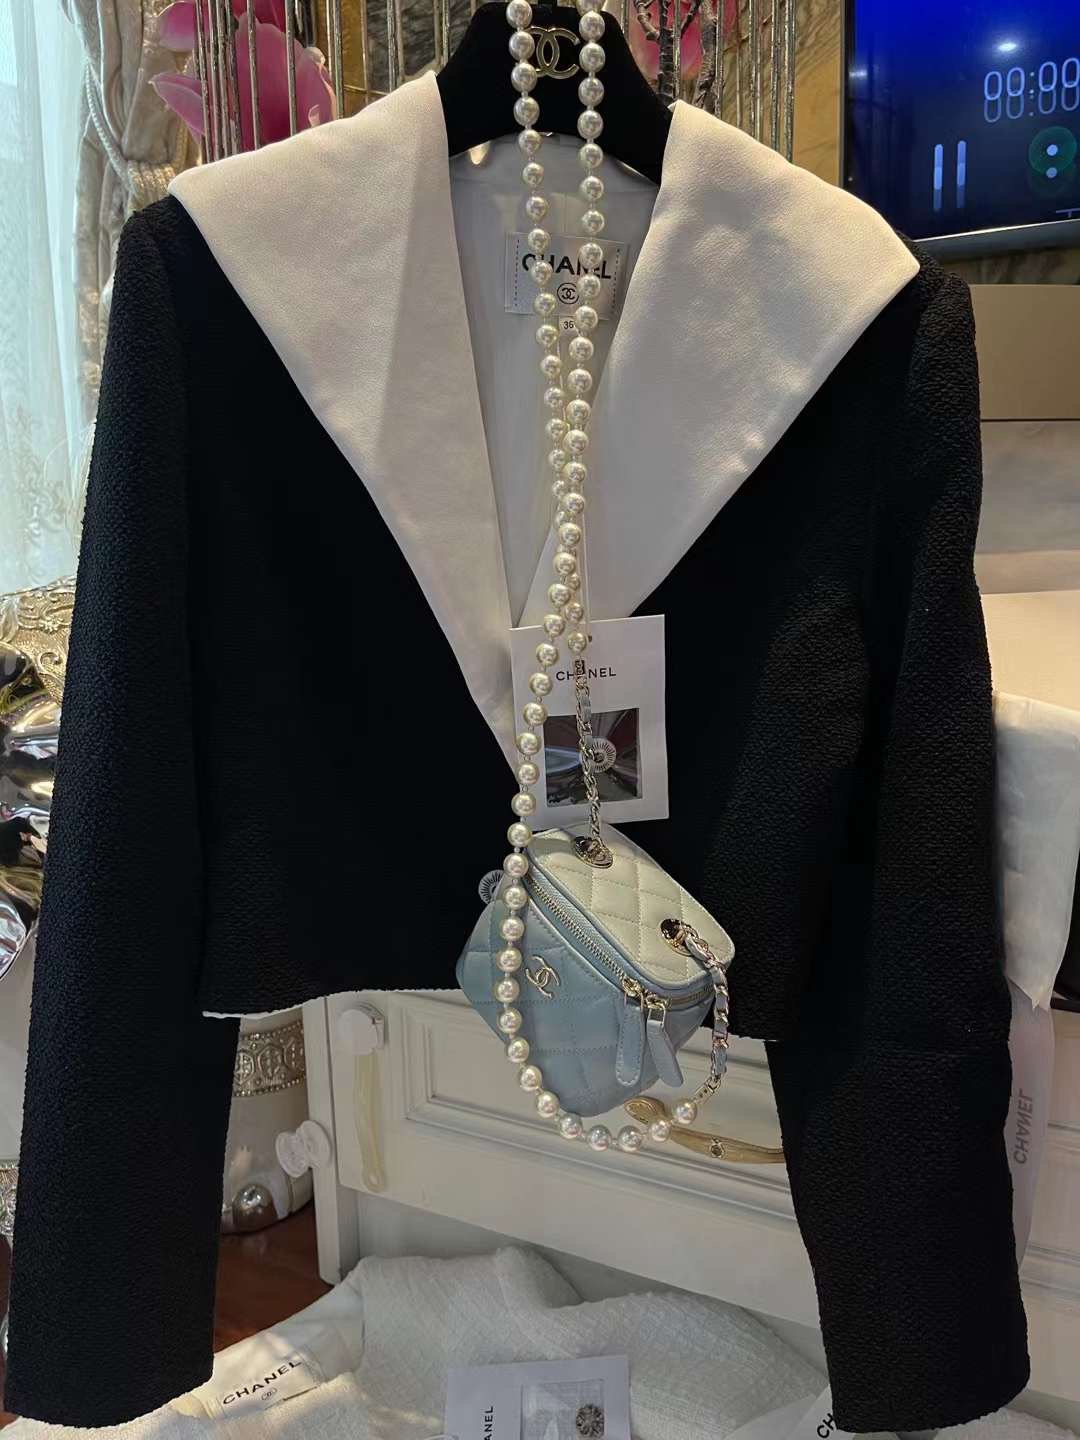 【P1020】香奈儿女包价格 Chanel蓝色进口羊皮珍珠链条盒子化妆包